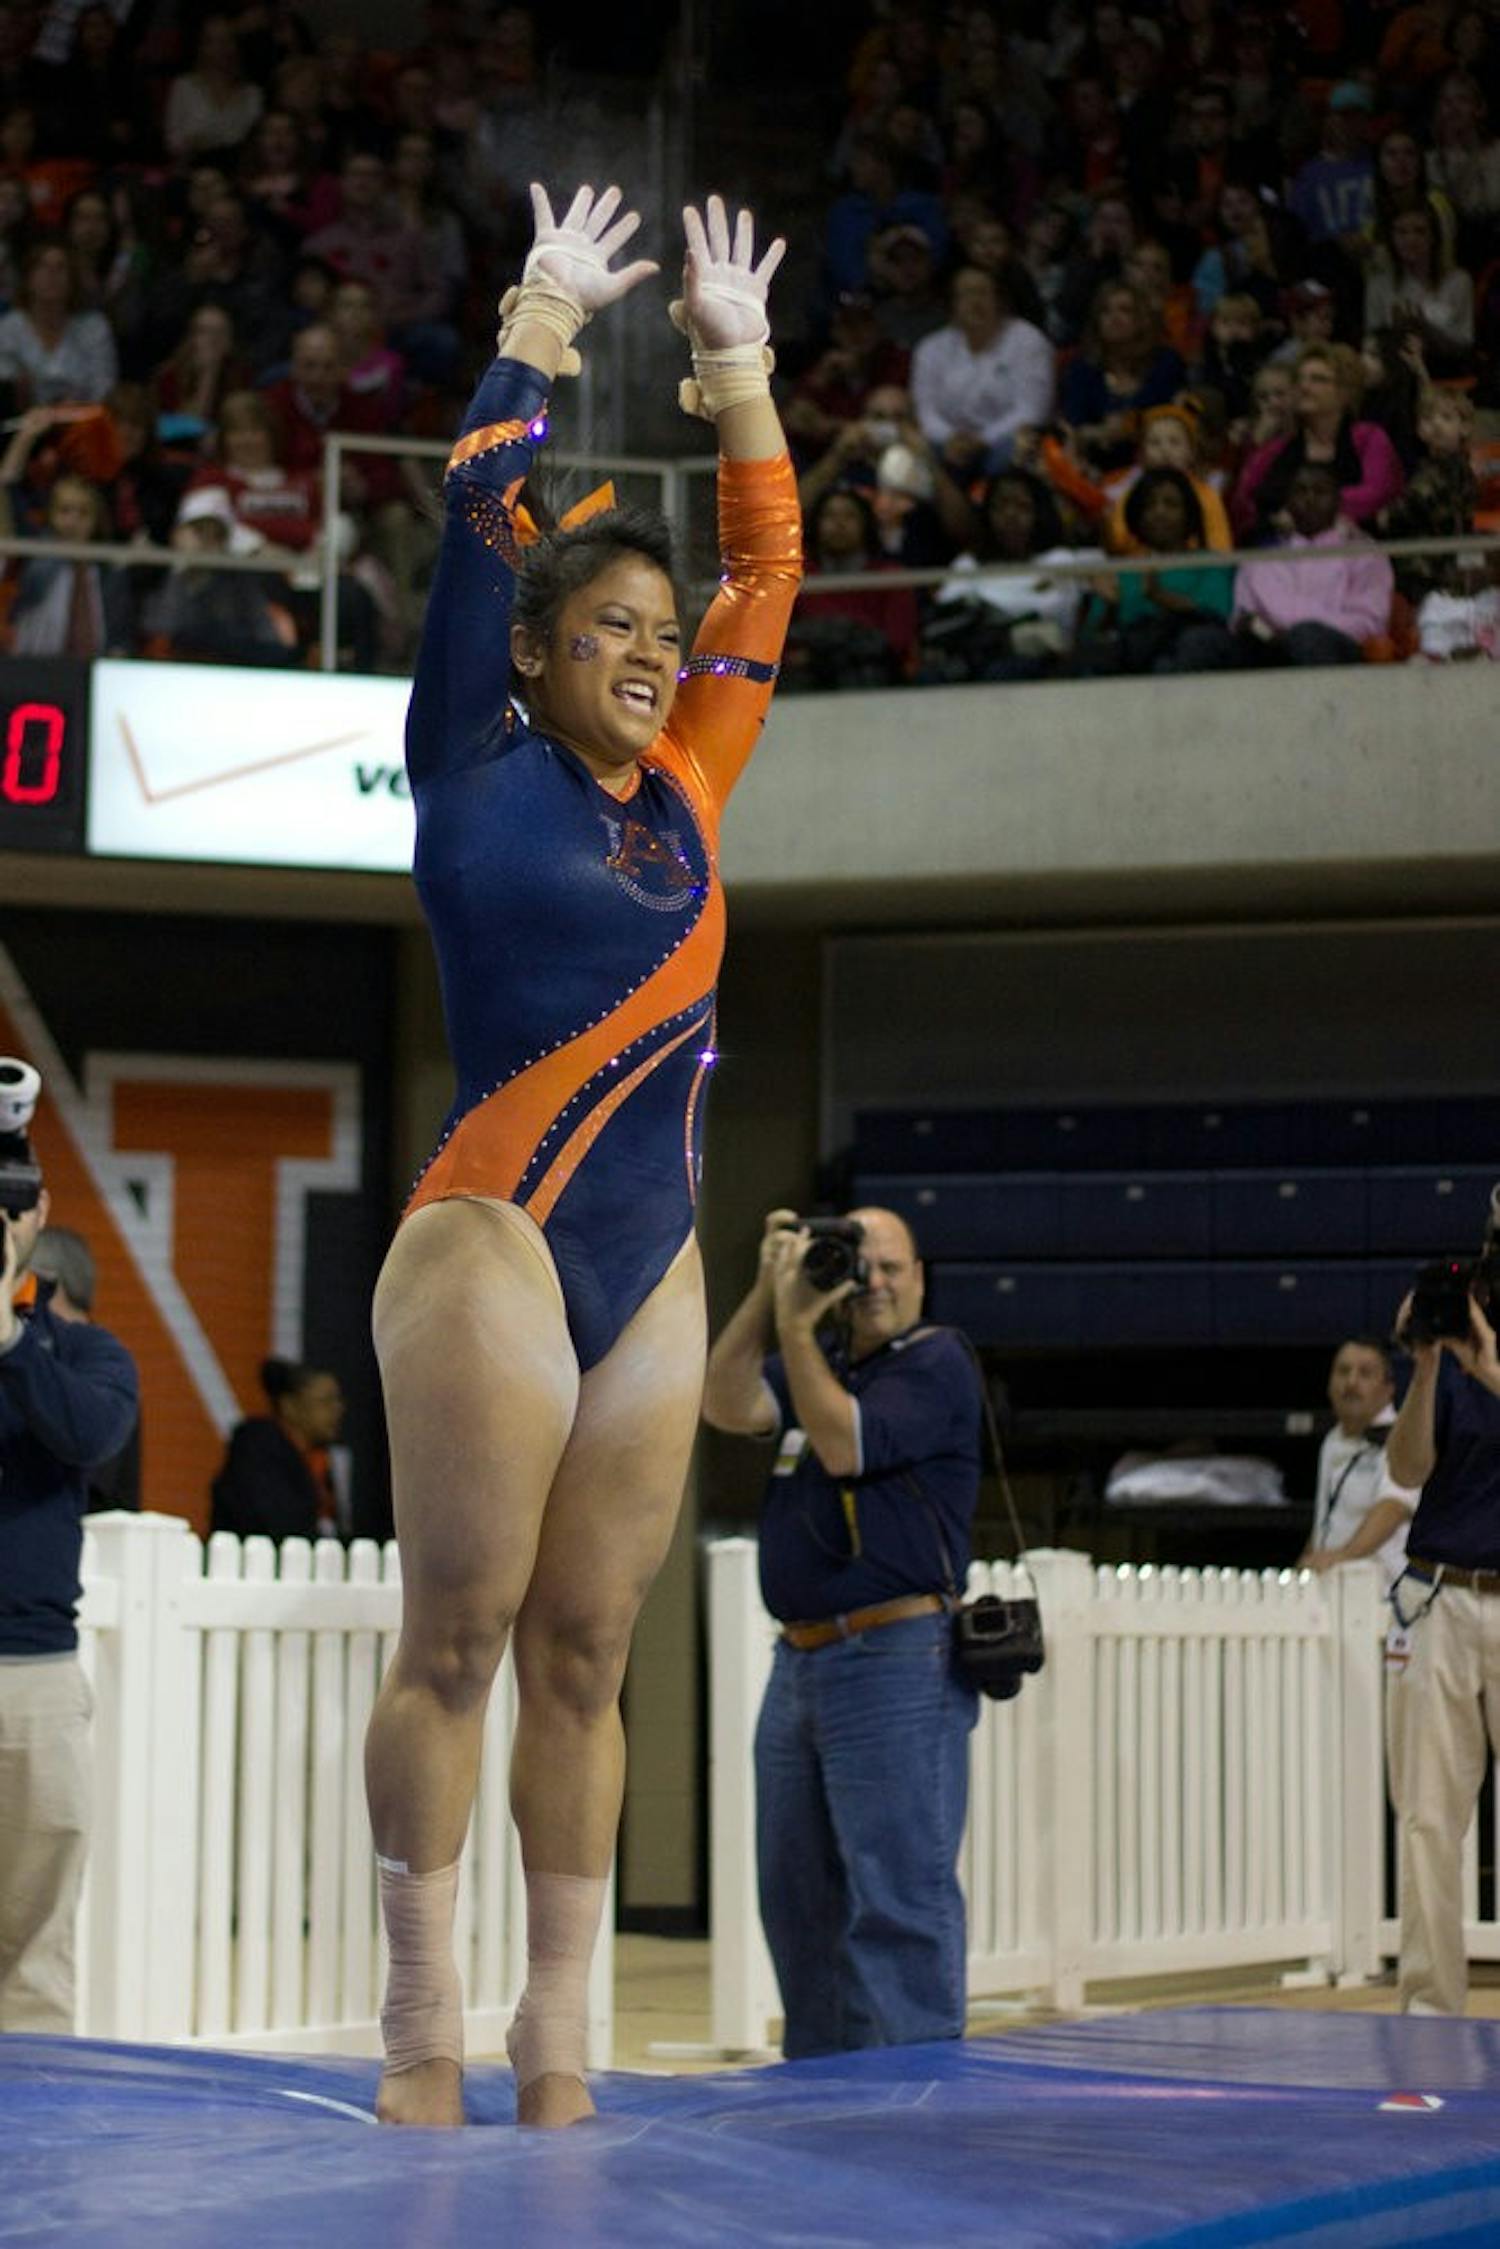 MJ Rott jumps for joy after sticking her landing during the Auburn vs Alabama gymnastics meet. Jenna Burgess / PHOTOGRAPHER